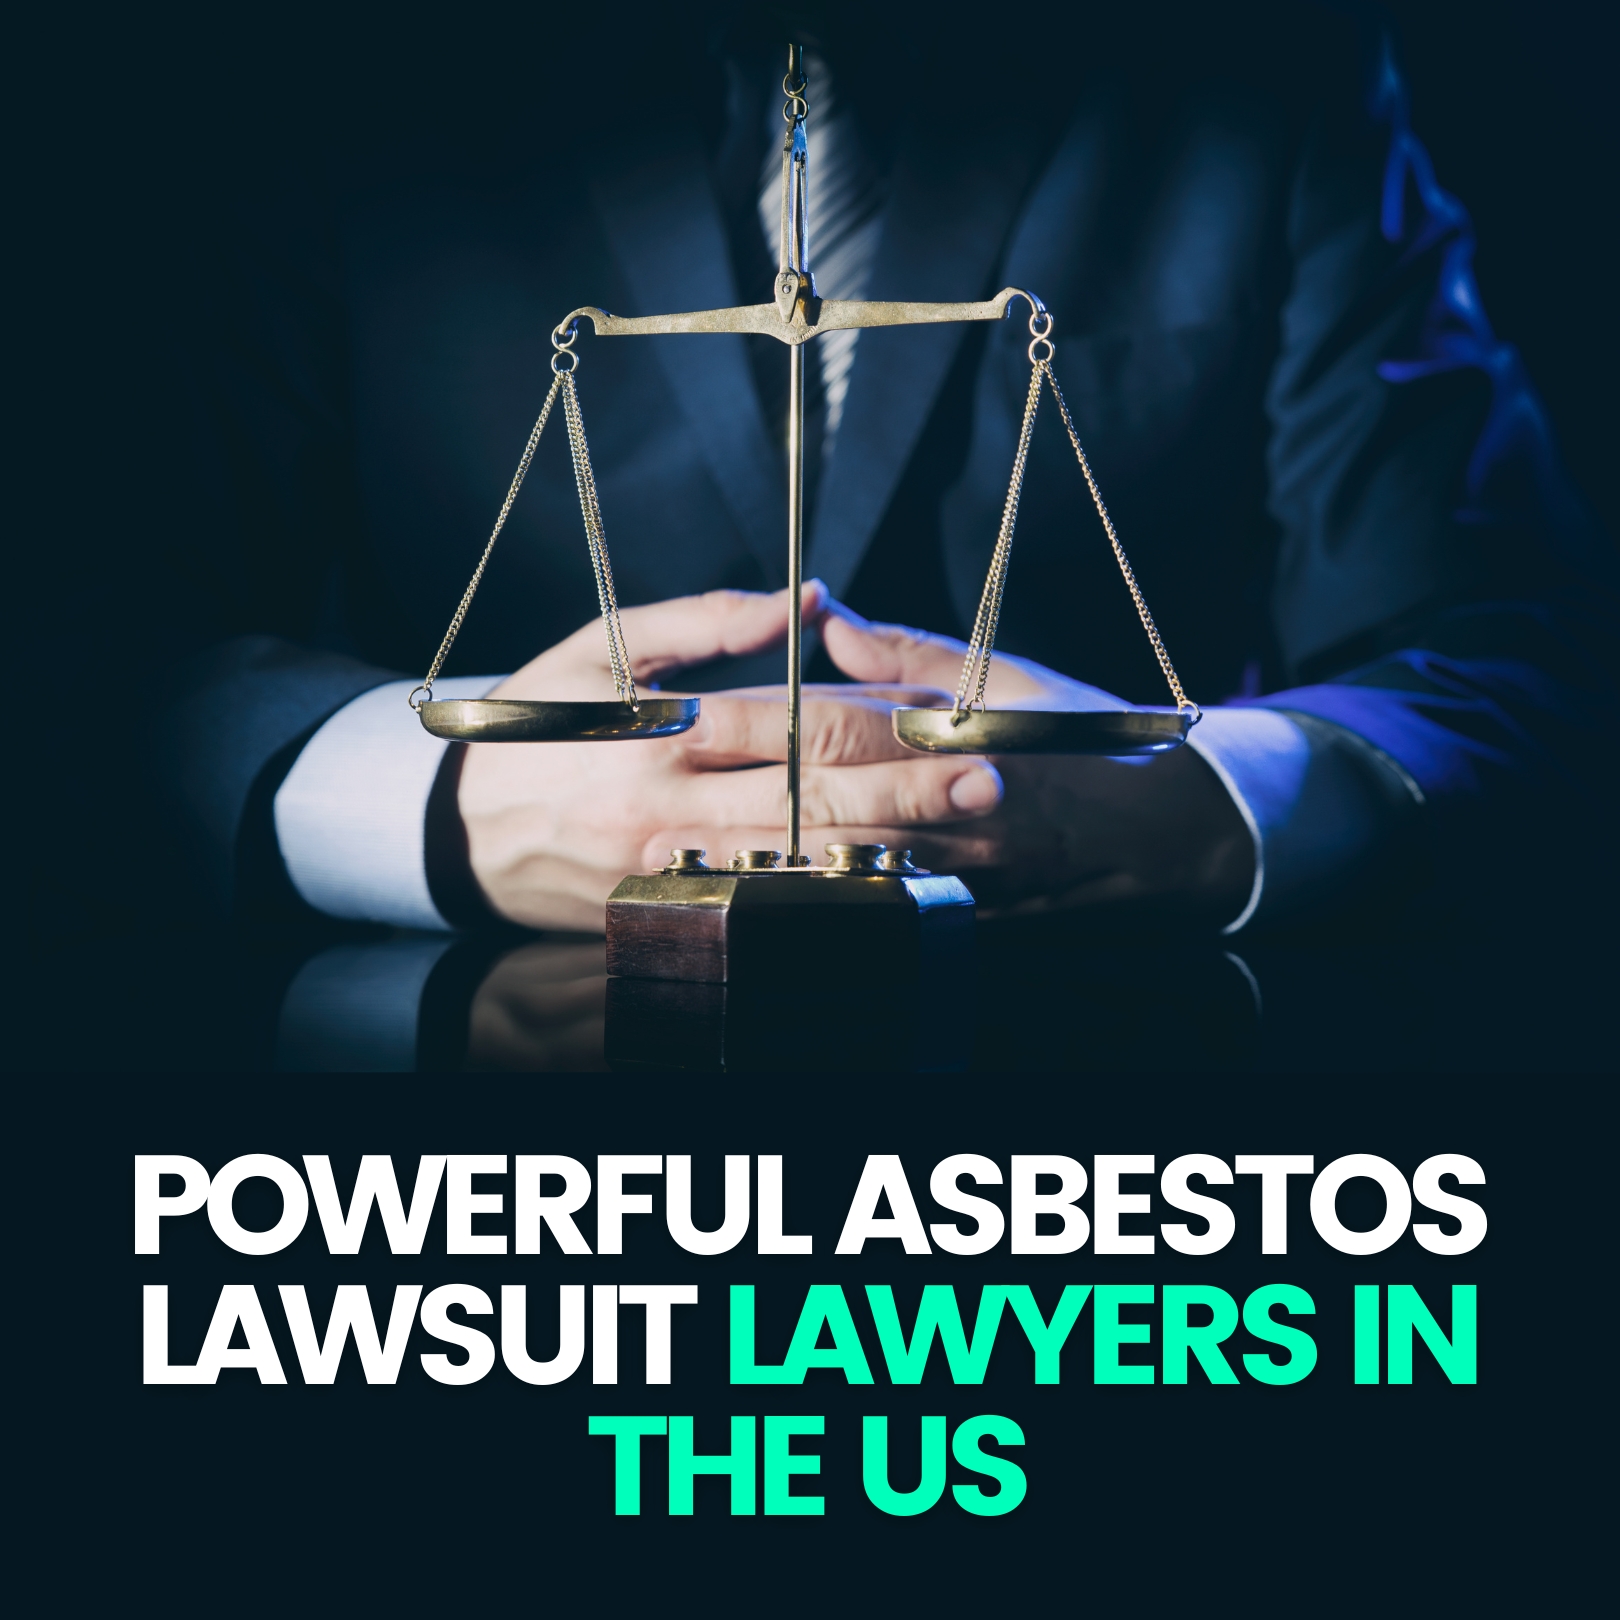 Asbestos Lawsuit Lawyers in The US, lawsuit asbestos exposure, Asbestos Lawsuit Lawyers, asbestos lawyers near me, attorneys for asbestos exposure, top asbestos law firms, asbestos claims law